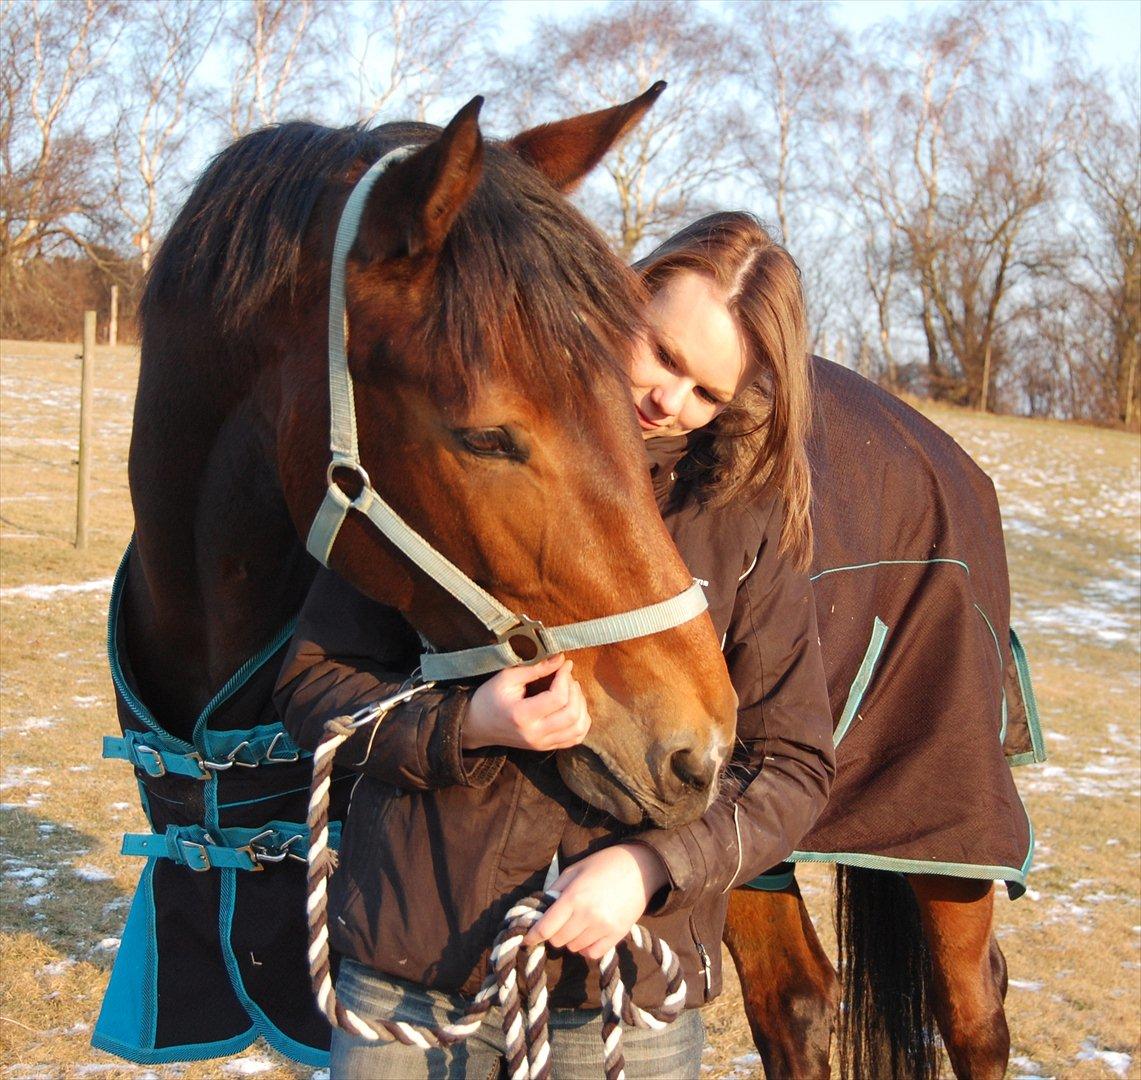 Anden særlig race Louzarina<3 (Baby-hesten) - Kunne ik leve uden dig! <3

4-2-2012 billede 8